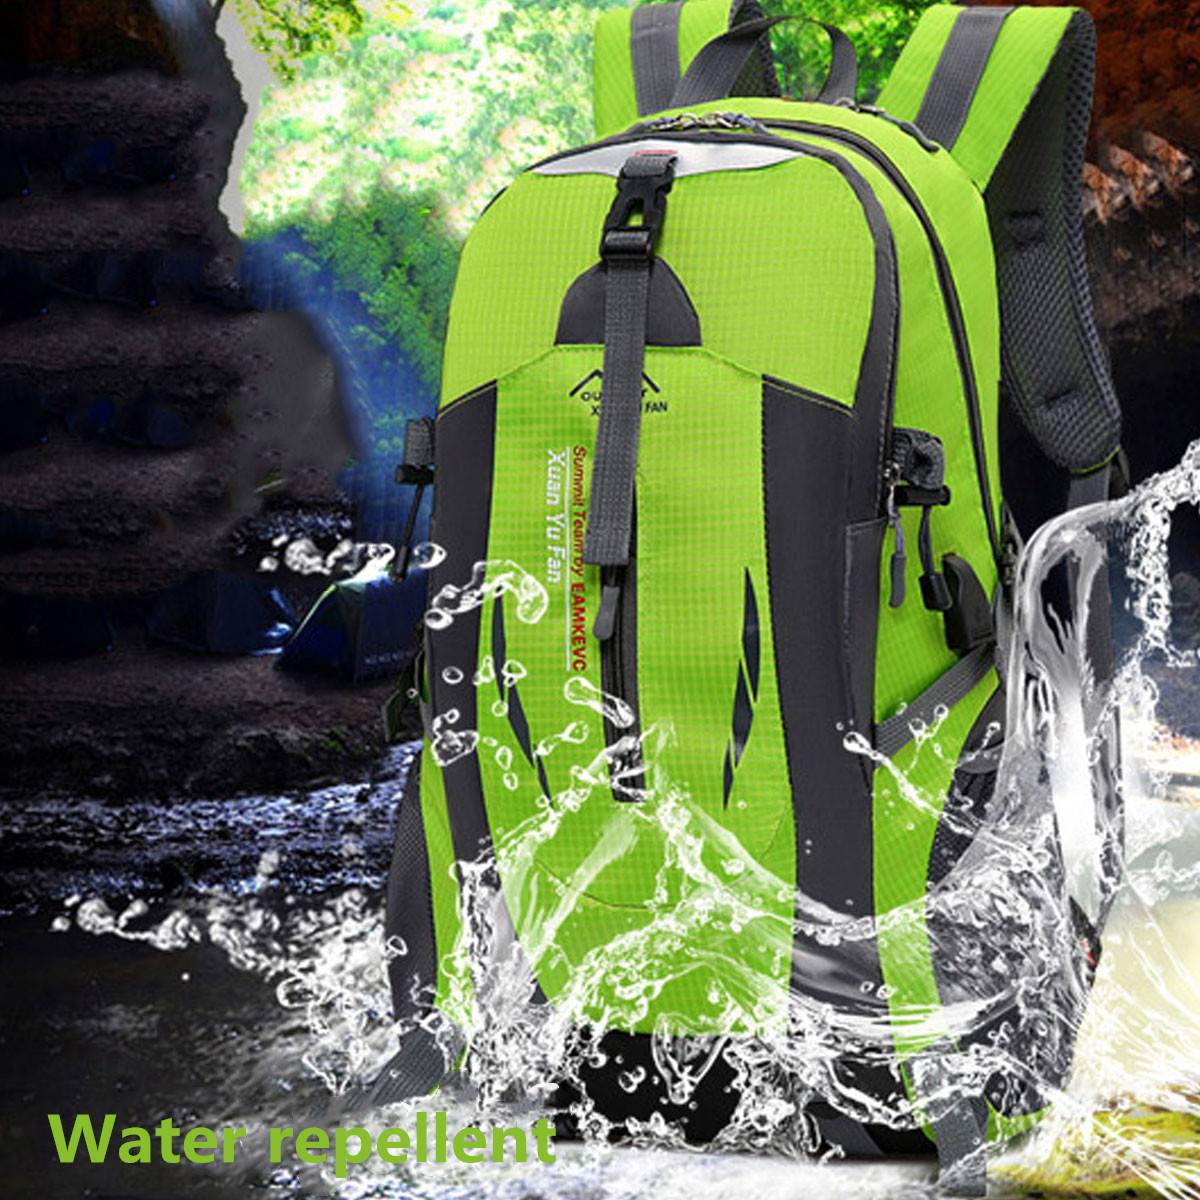 Waterproof USB Port Hiking Bag | Waterproof USB Bag | USB Backpacks Bag | Gadgets Angels